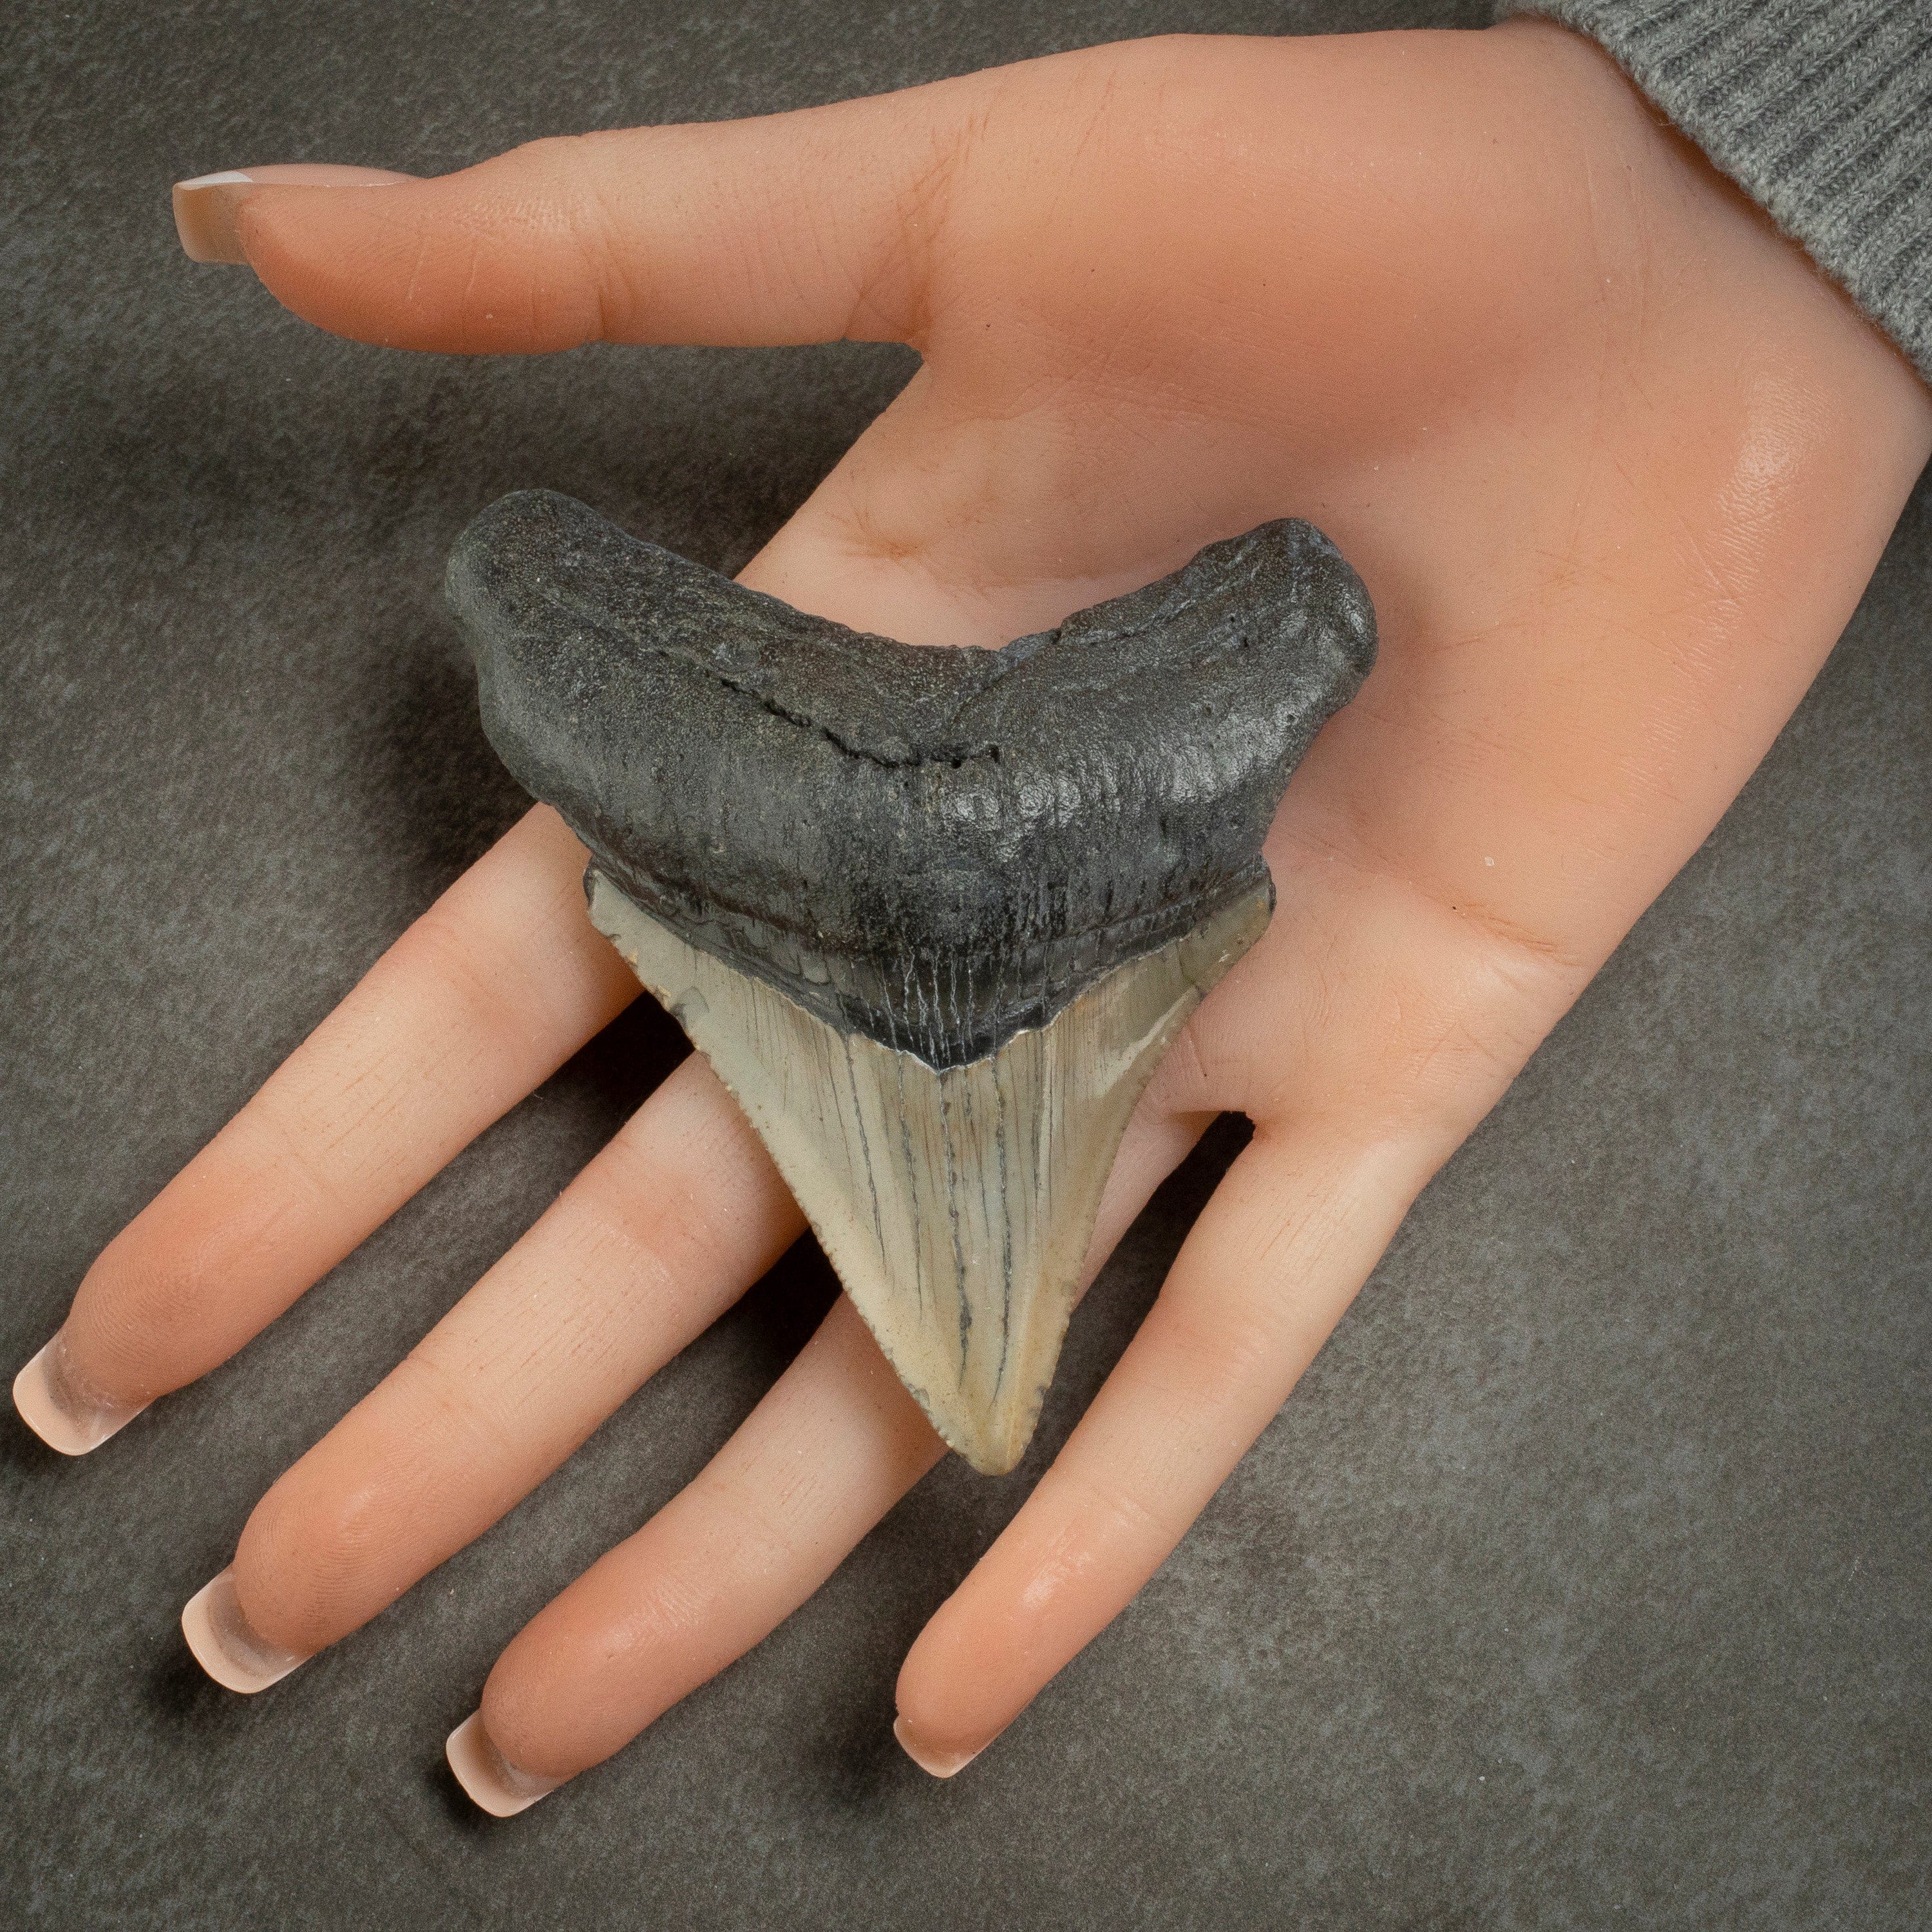 Kalifano Megalodon Teeth Megalodon Tooth from South Carolina - 3.4" ST1400.037